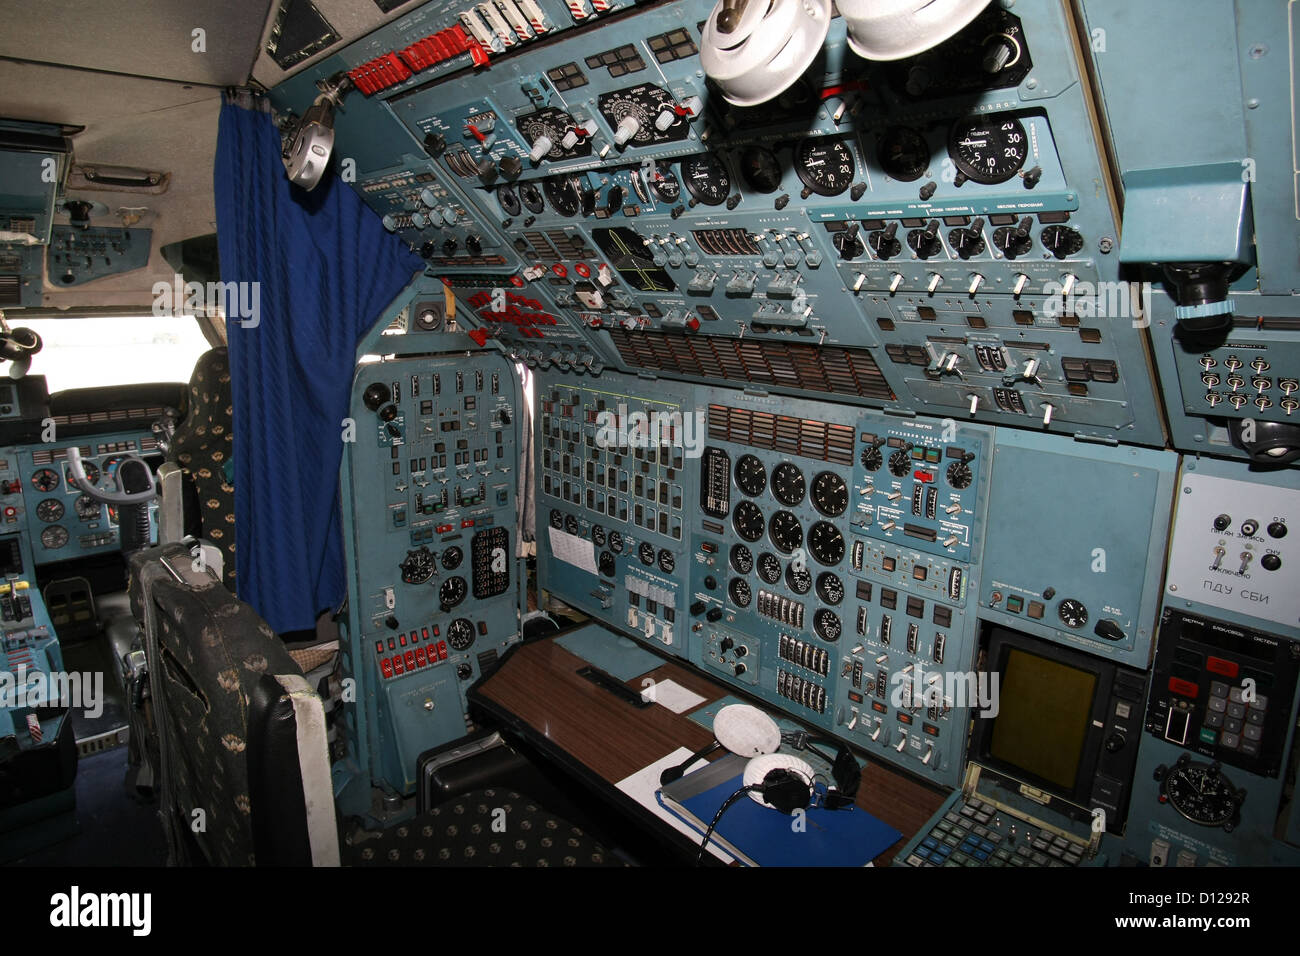 Antonov Plane 225 High Resolution Stock Photography and Images - Alamy